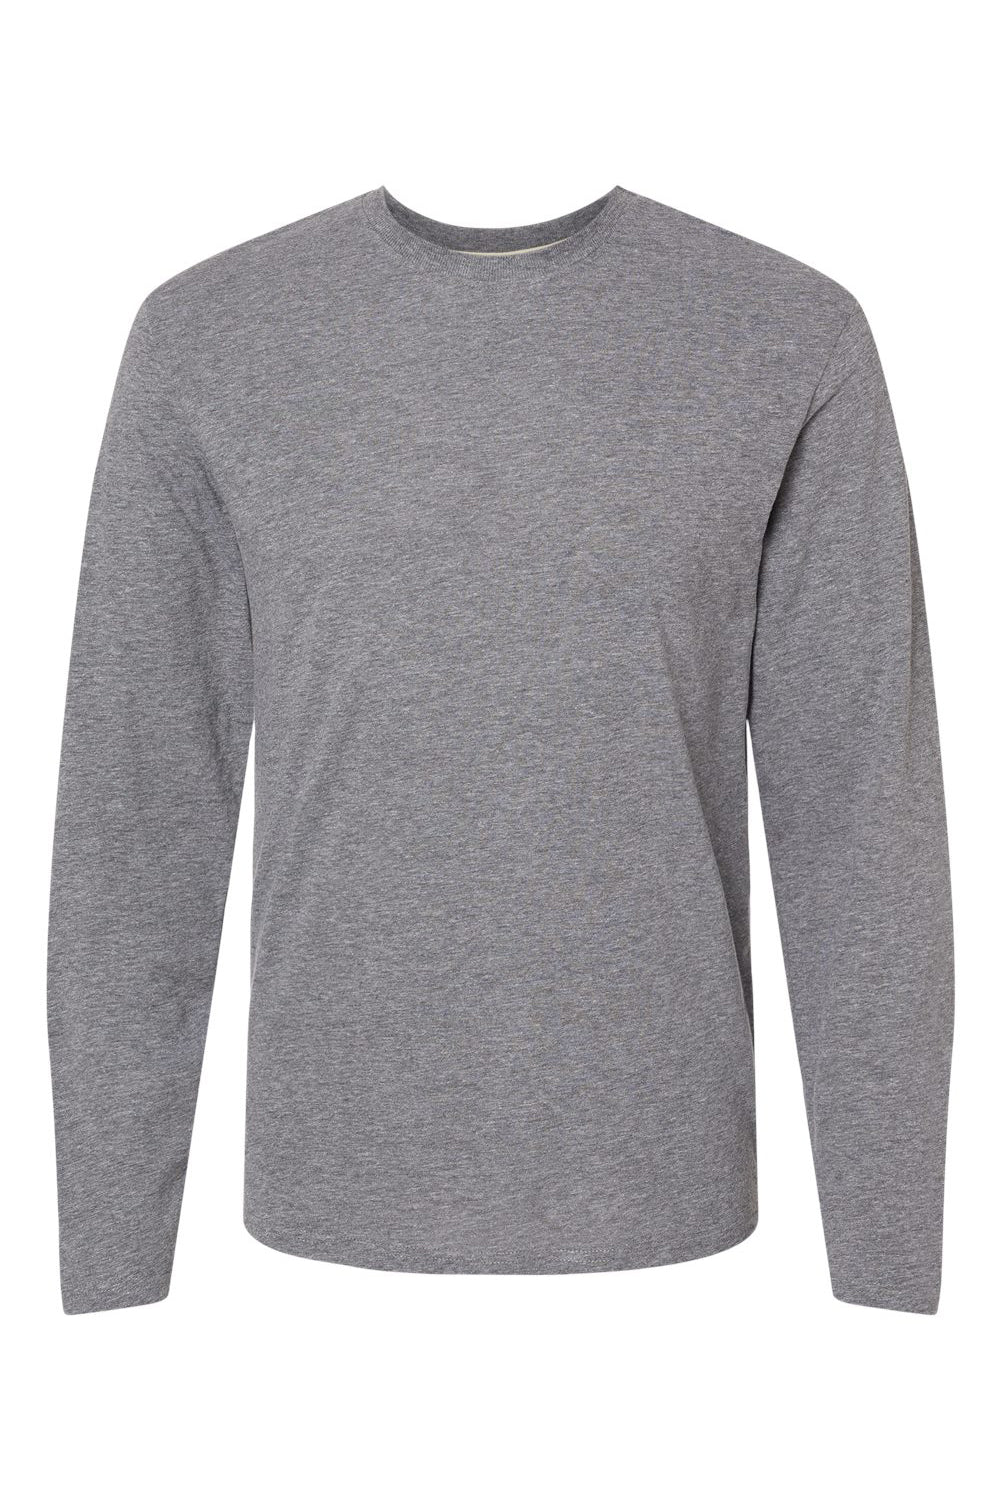 LAT 6918 Mens Fine Jersey Long Sleeve Crewneck T-Shirt Heather Granite Grey Flat Front